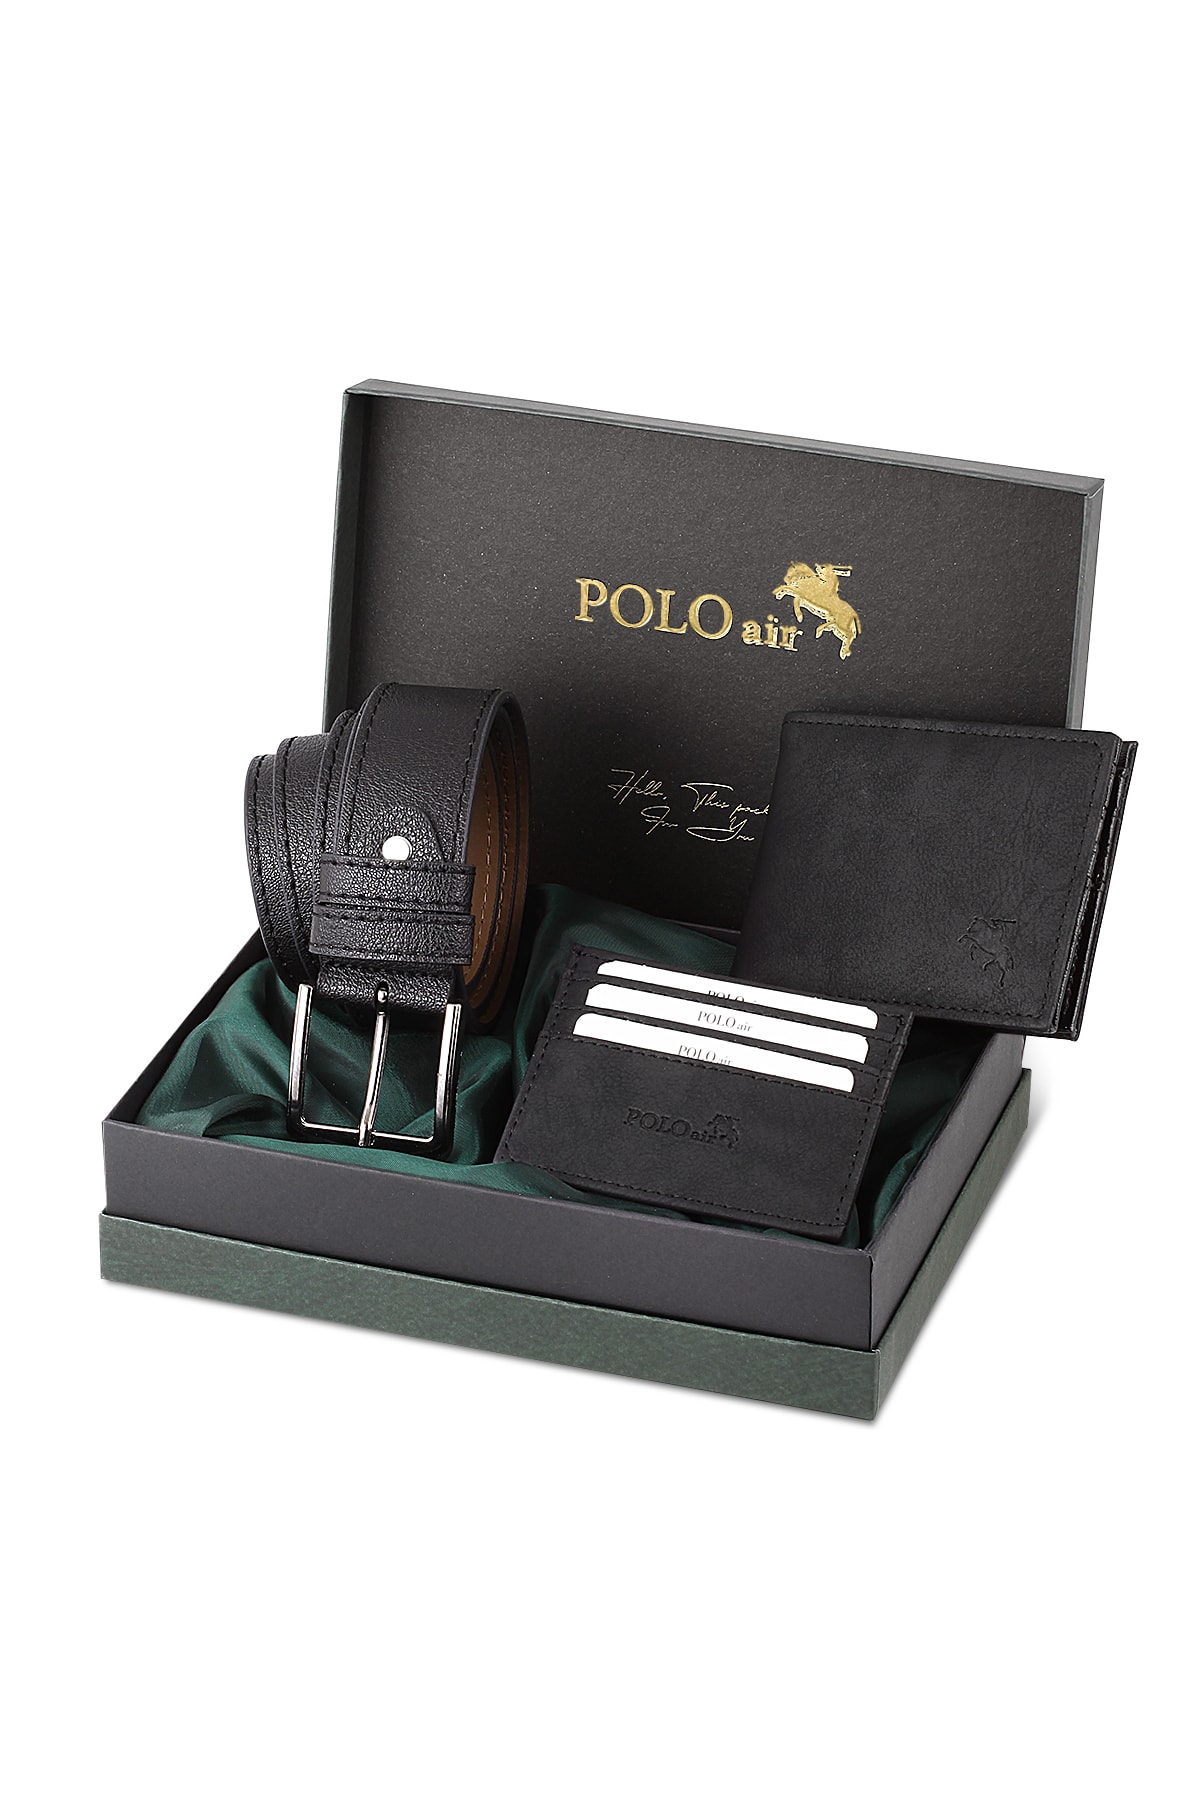 Polo Air Belt Wallet Card Holder Black Set In Gift Box